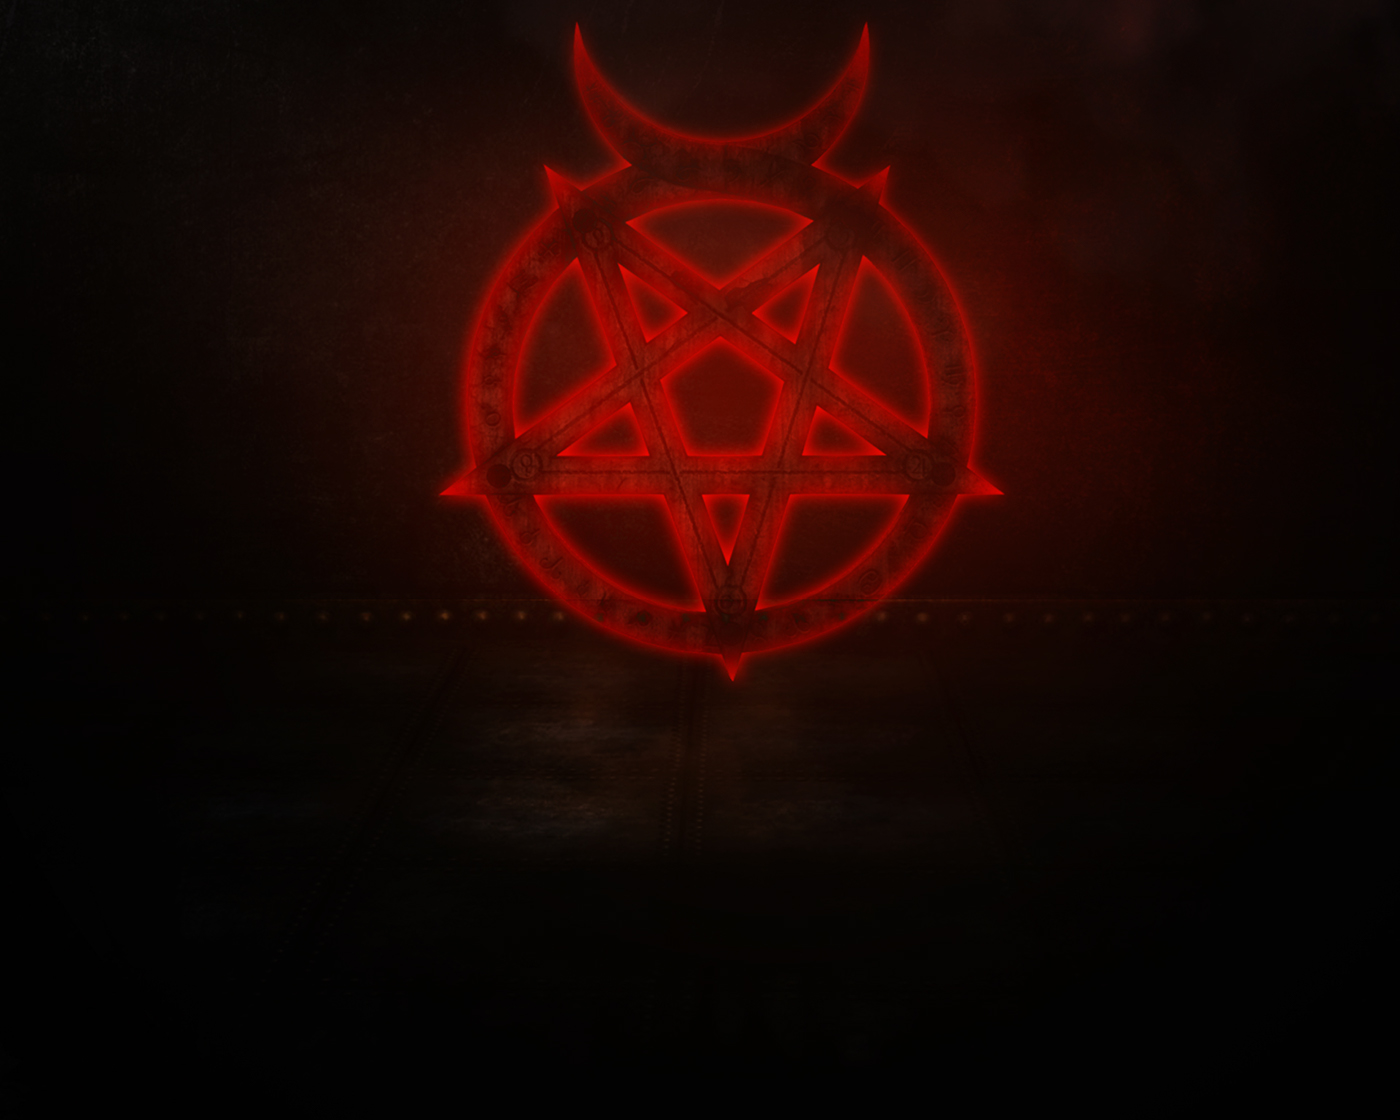 Satanist conspiracy demon great plot fire Magic   Masons photoshop manipulation darkness